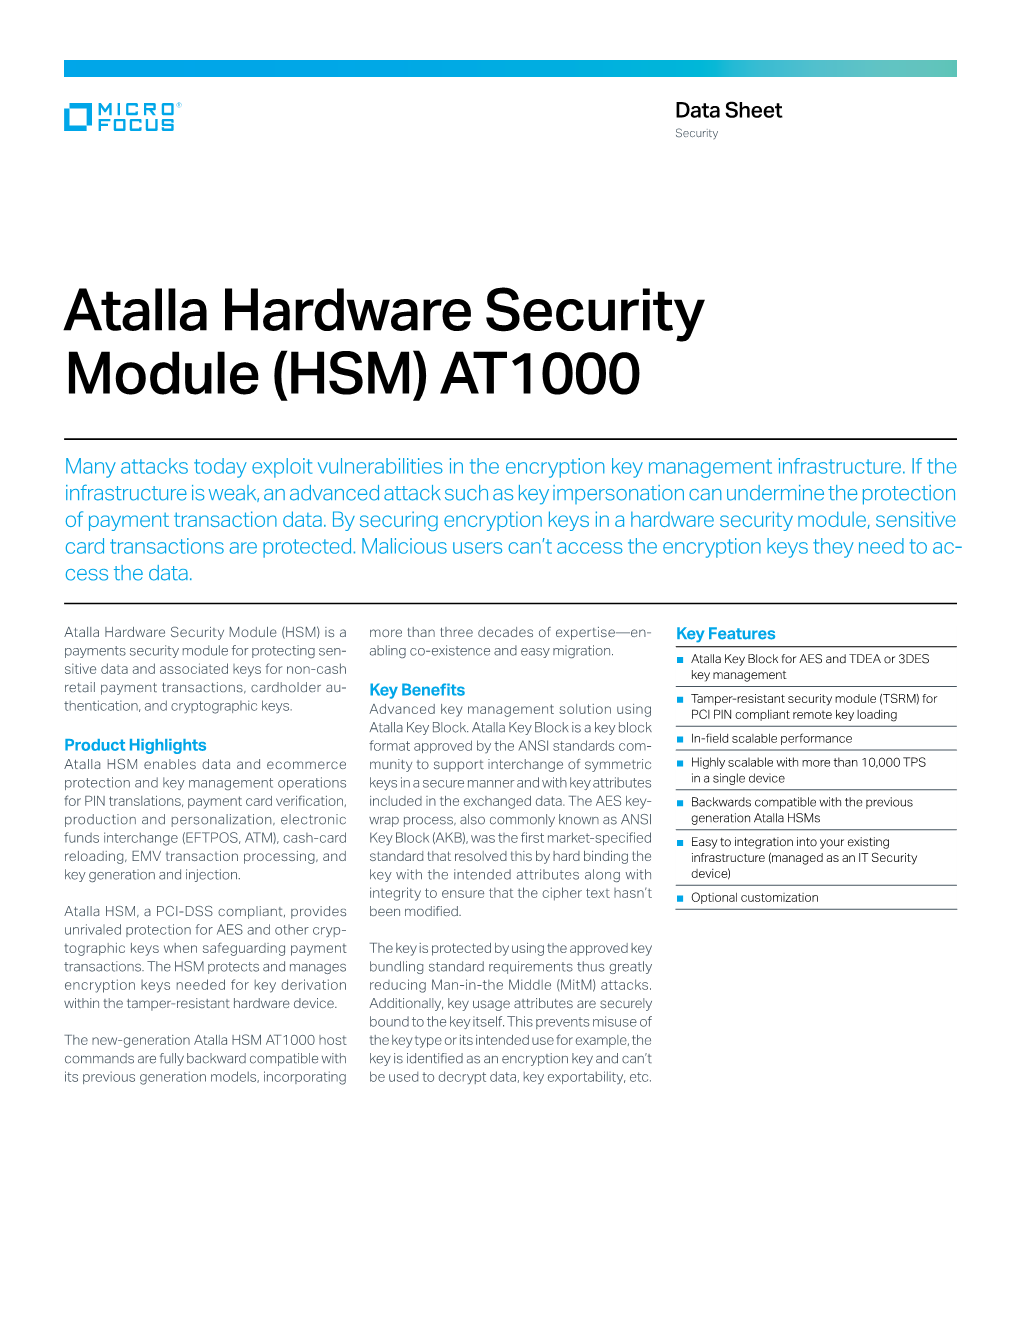 Atalla Hardware Security Module (HSM) AT1000